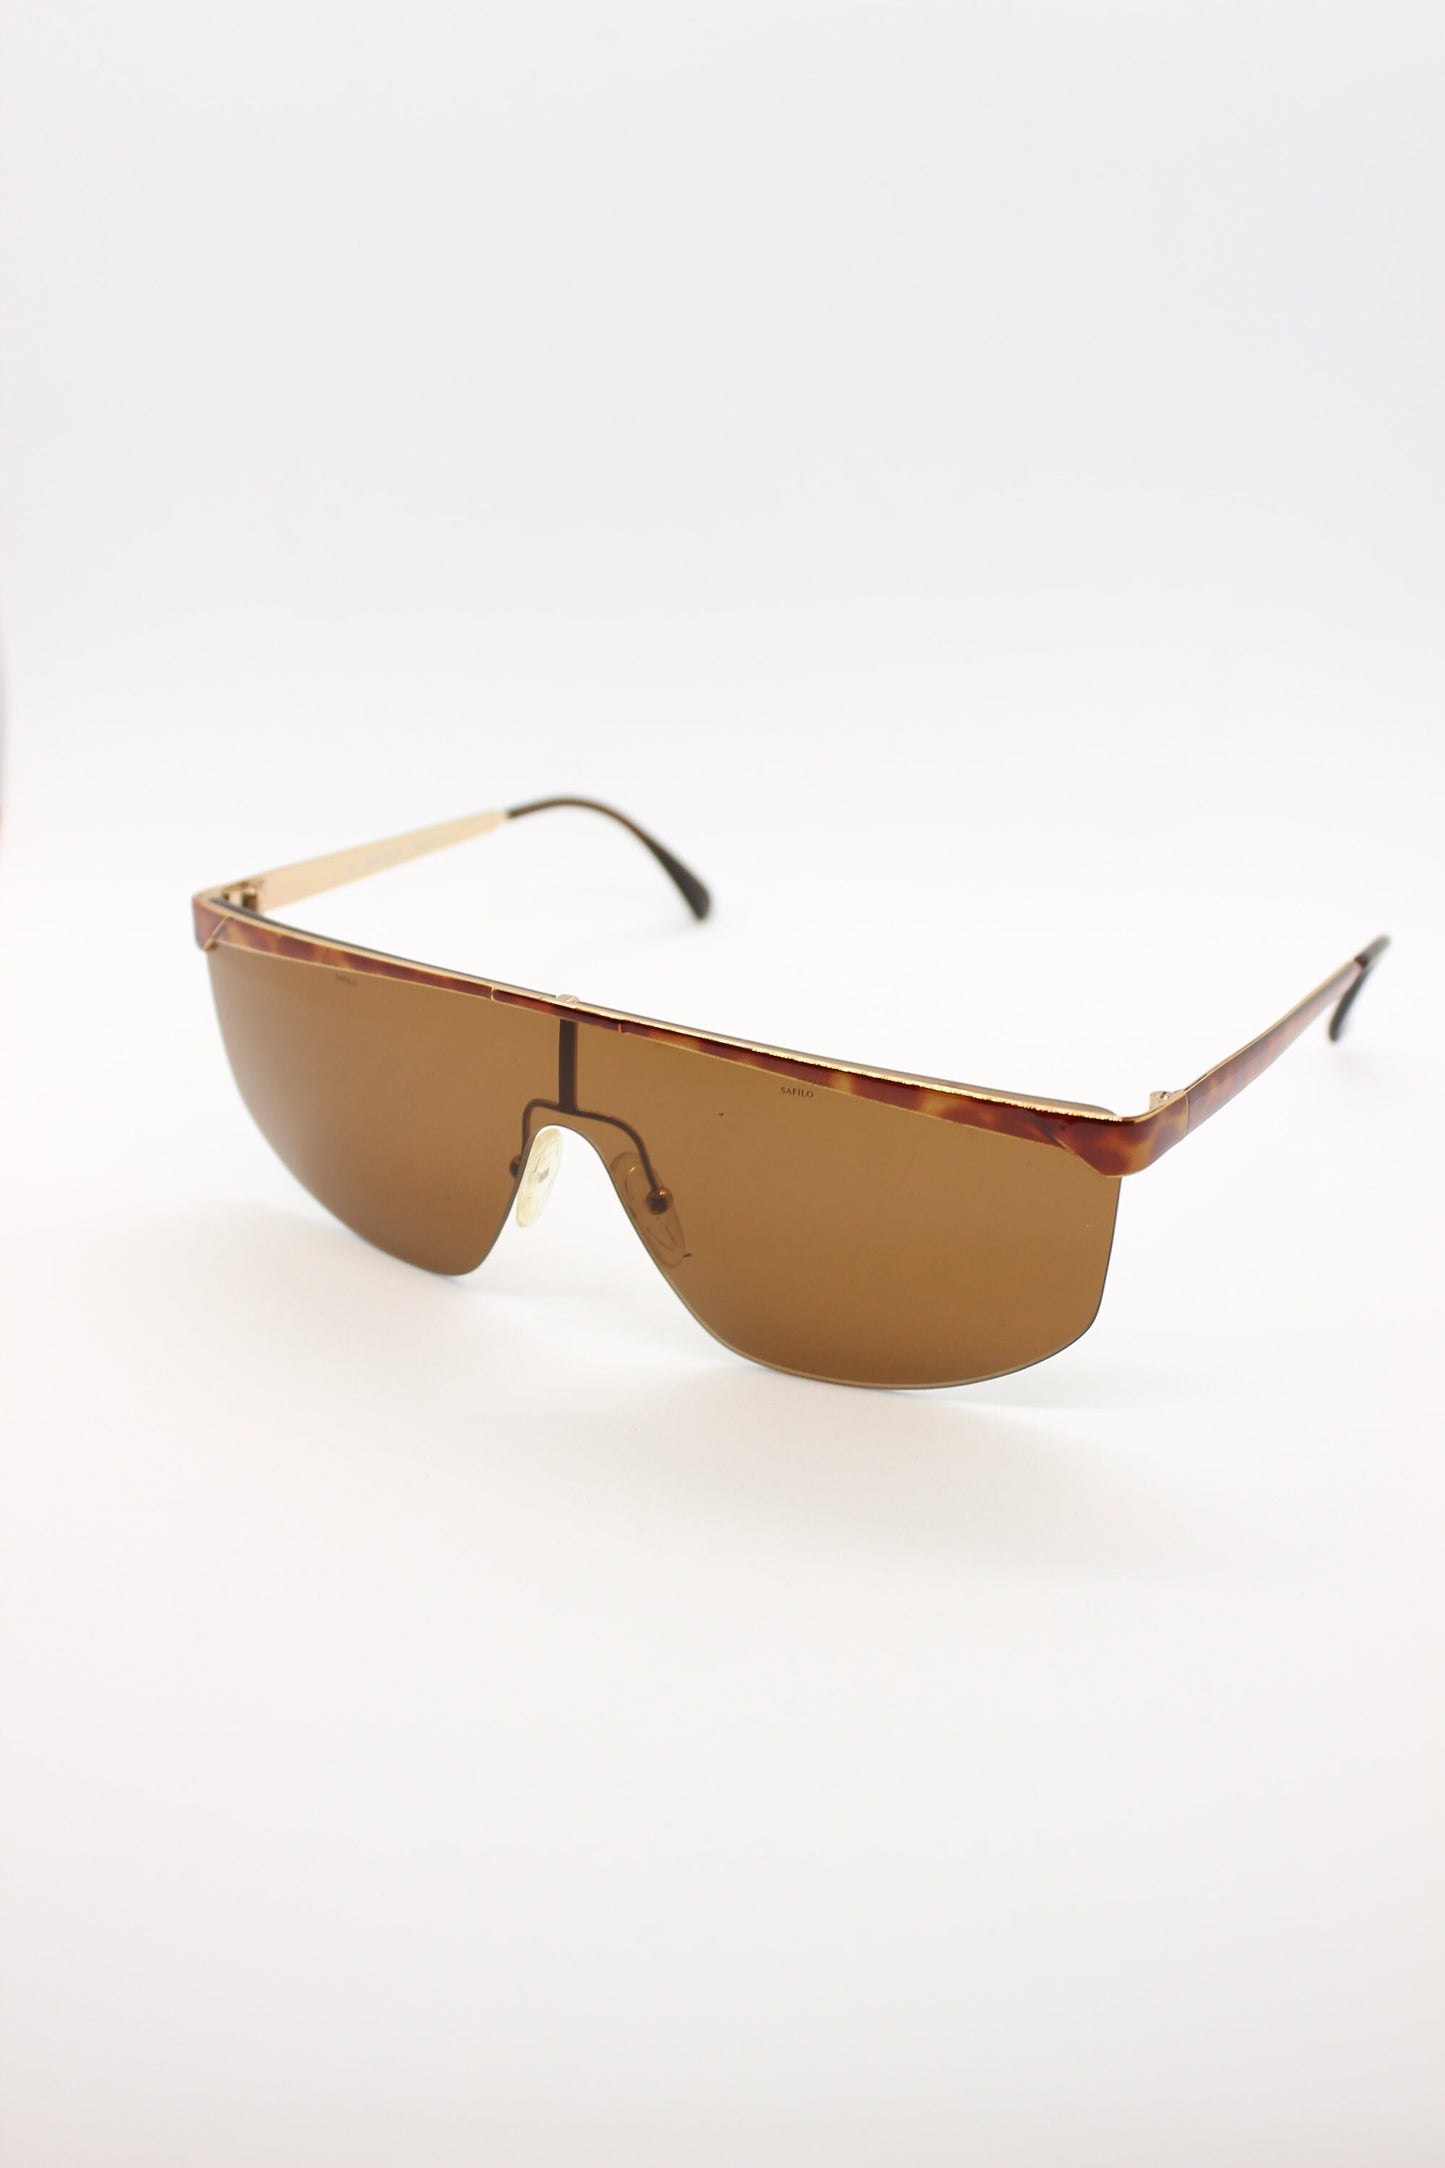 SAFILO 90s Mod. "Linea 550" Vintage New Old Stock sunglasses. Never worn